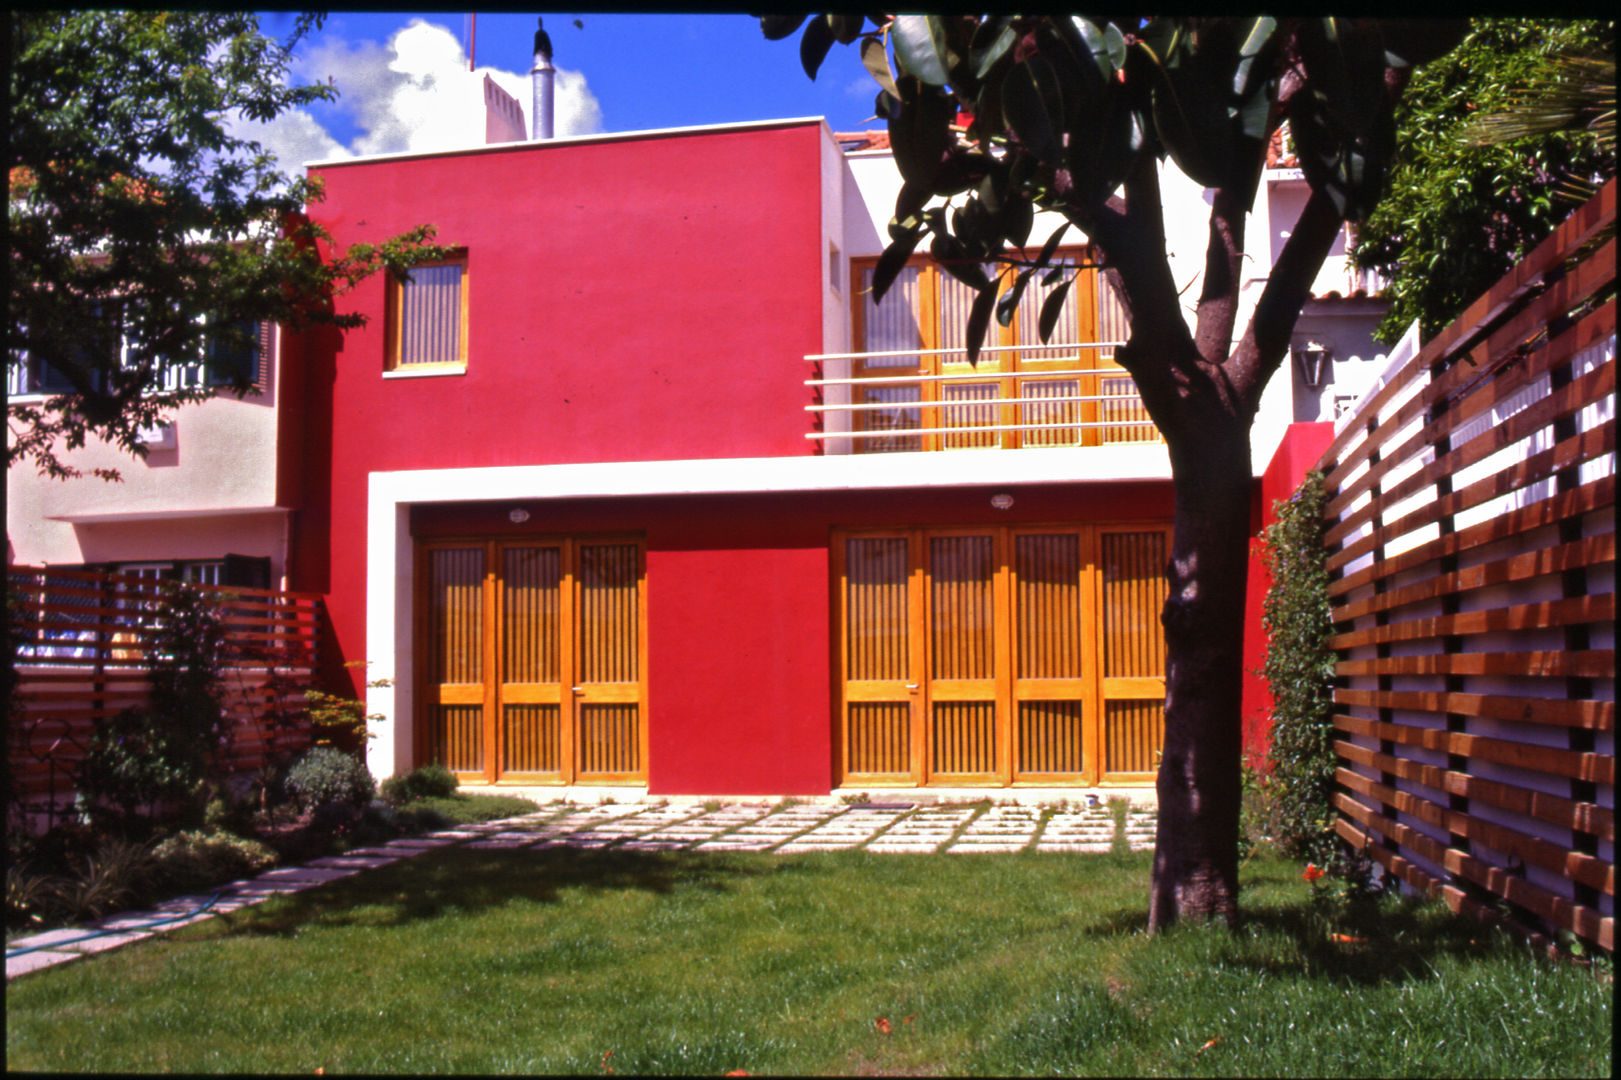 Casa no Restelo, Borges de Macedo, Arquitectura. Borges de Macedo, Arquitectura. Casas modernas